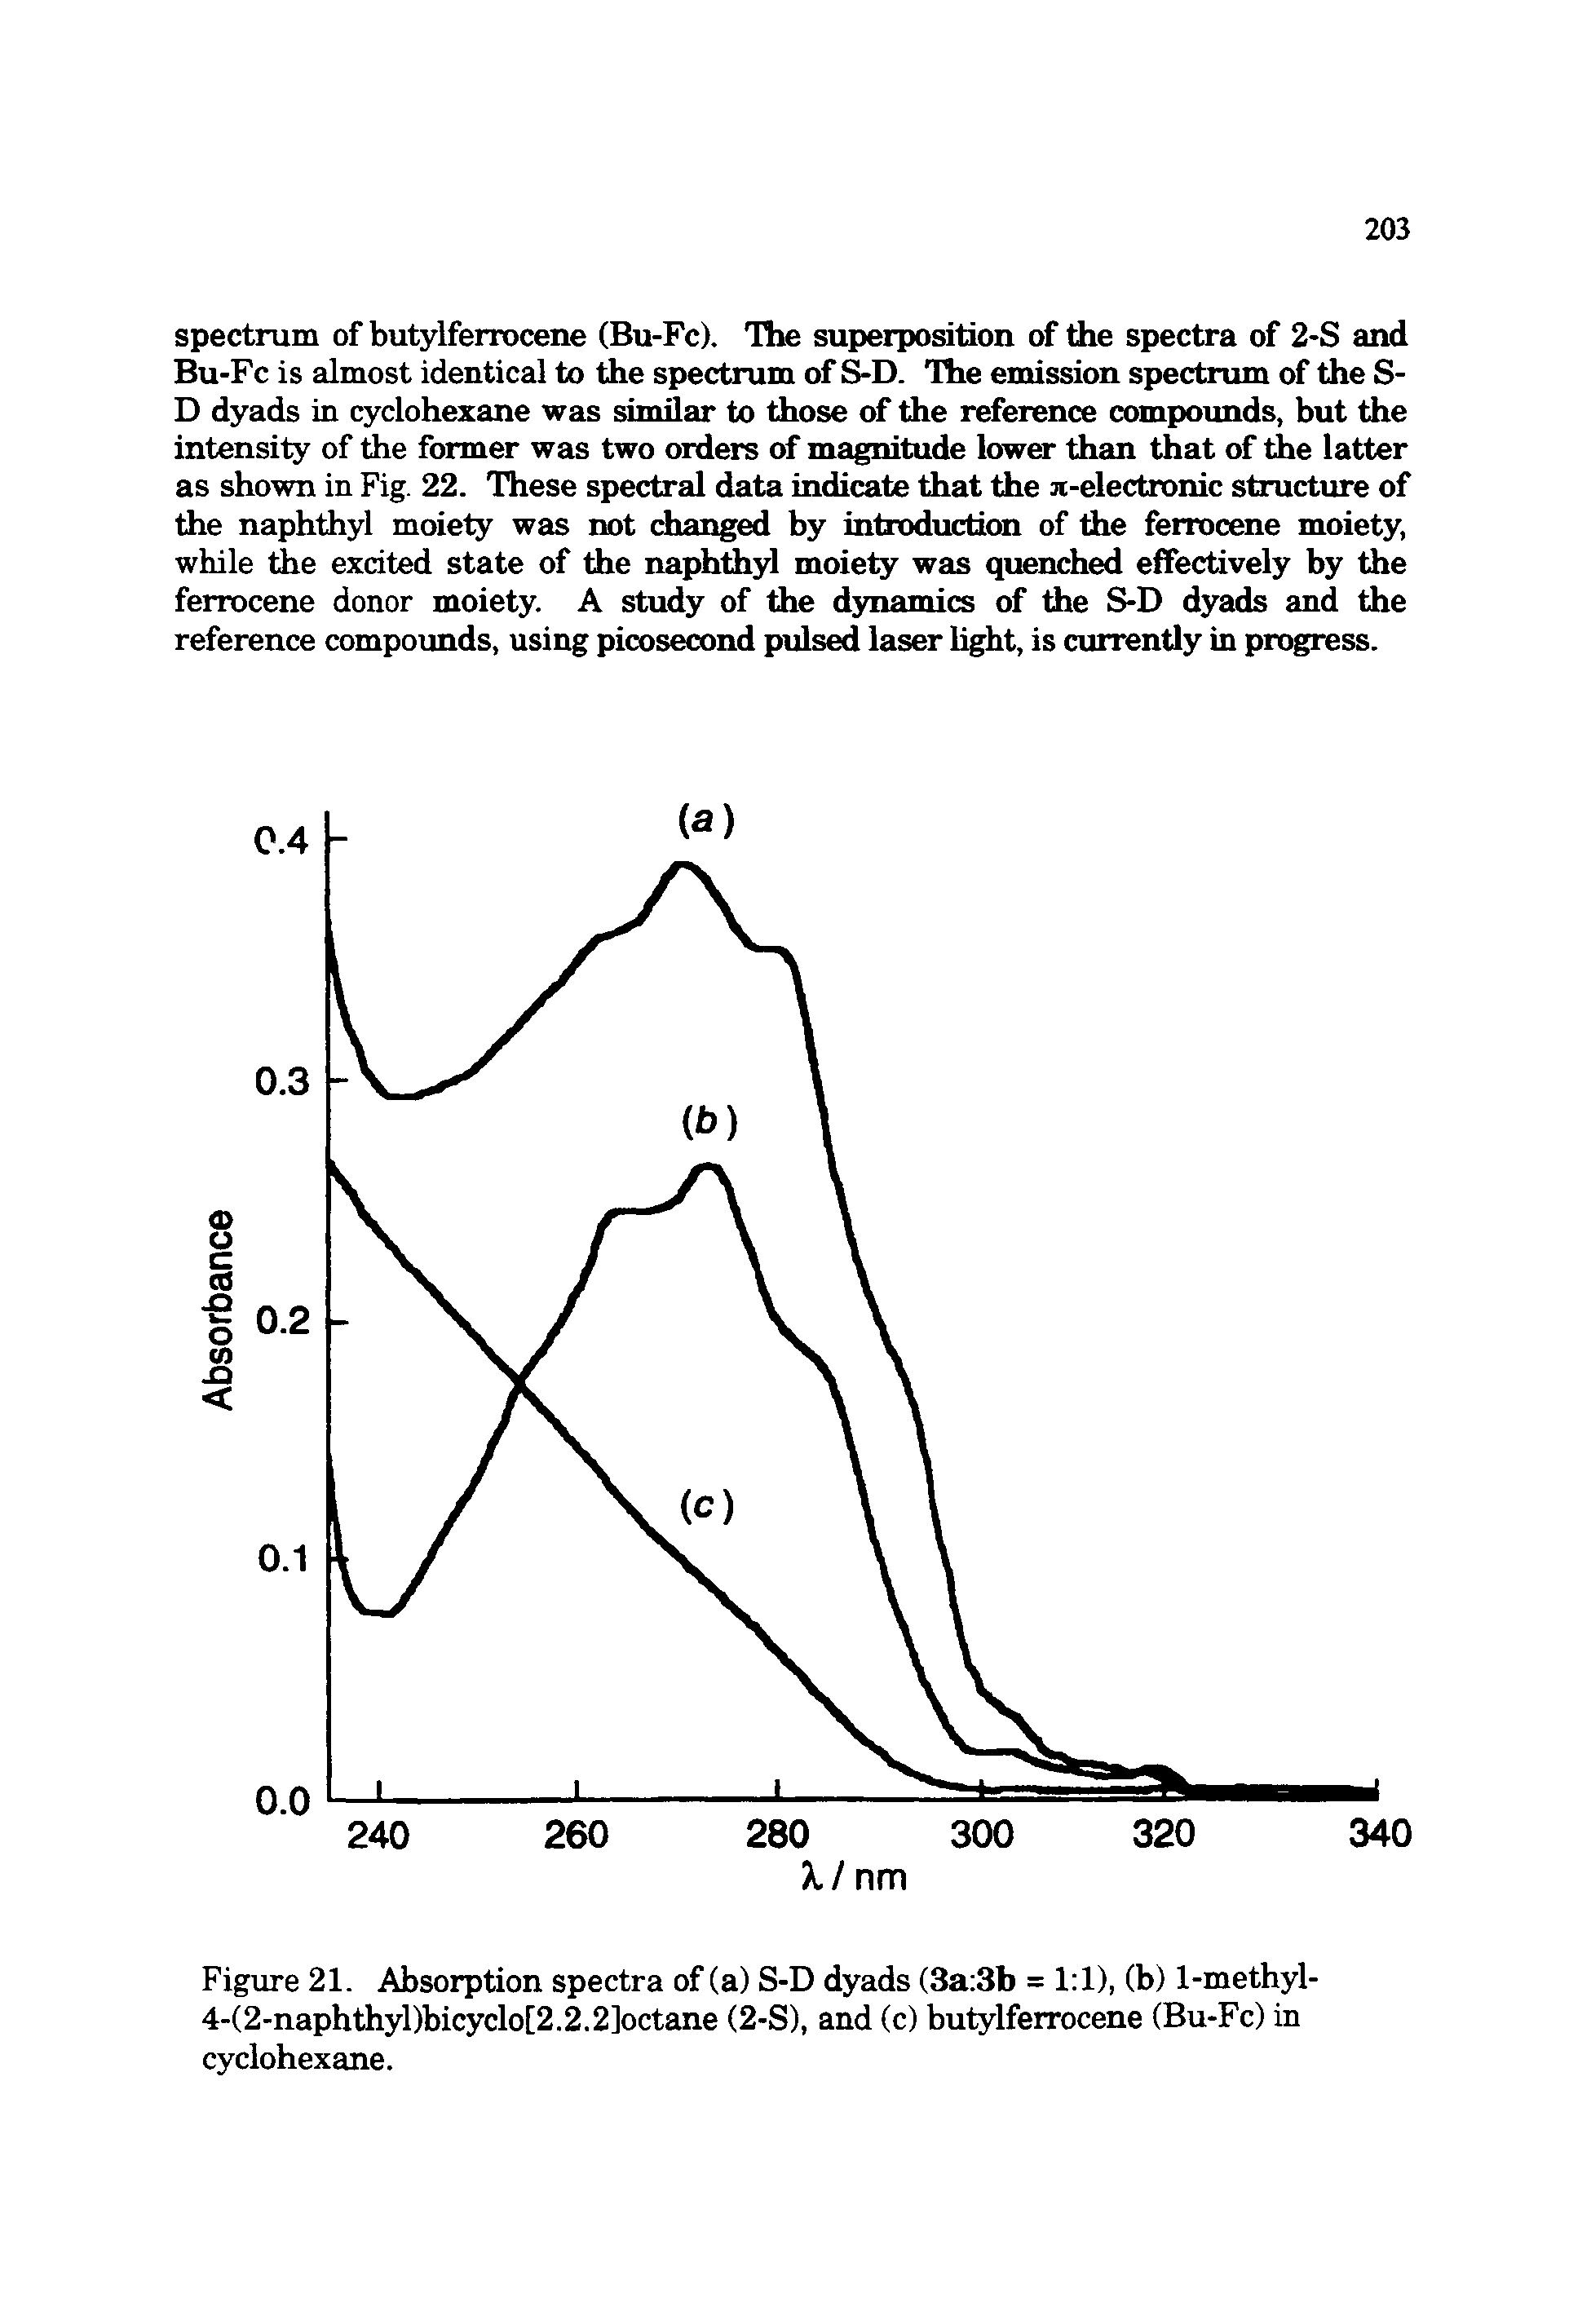 Figure 21. Absorption spectra of (a) S-D dyads (3a 3b = 1 1), (b) 1-methyl-4-(2-naphthyl)bicyclo[2.2.2]octane (2-S), and (c) butylferrocene (Bu-Fc) in cyclohexane.